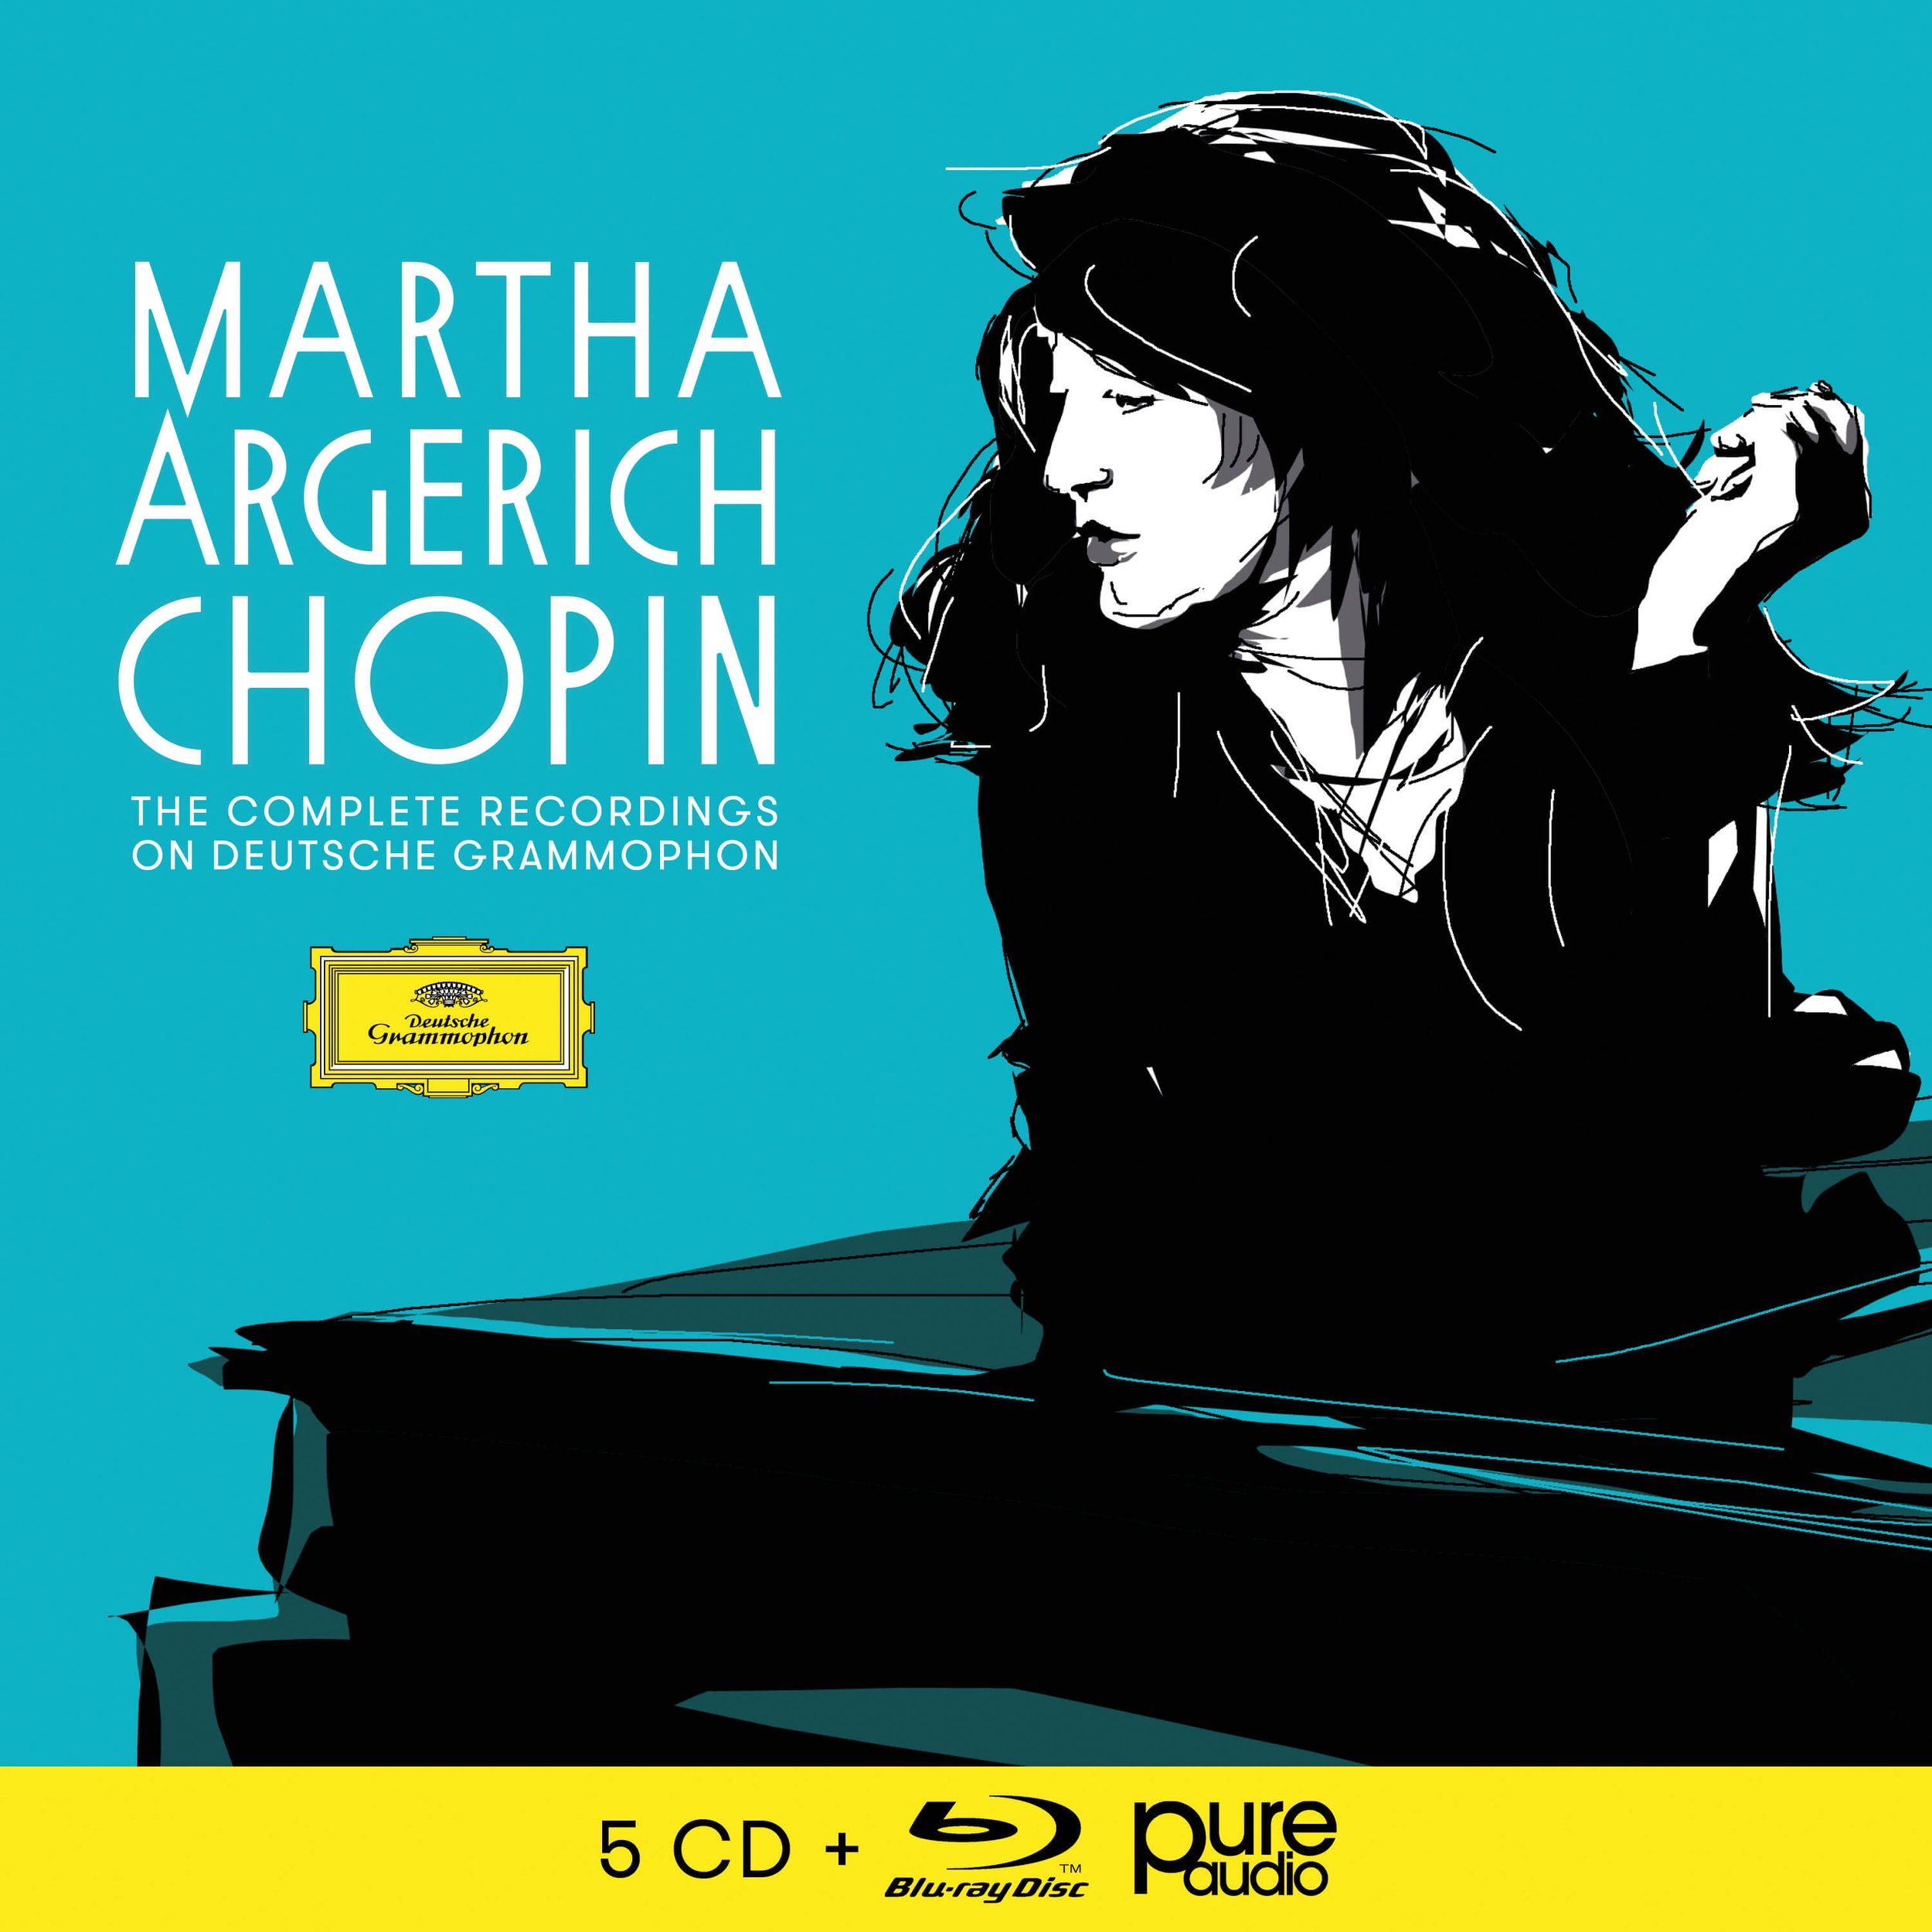 MarthaArgerich_Chopin_Cover.jpg